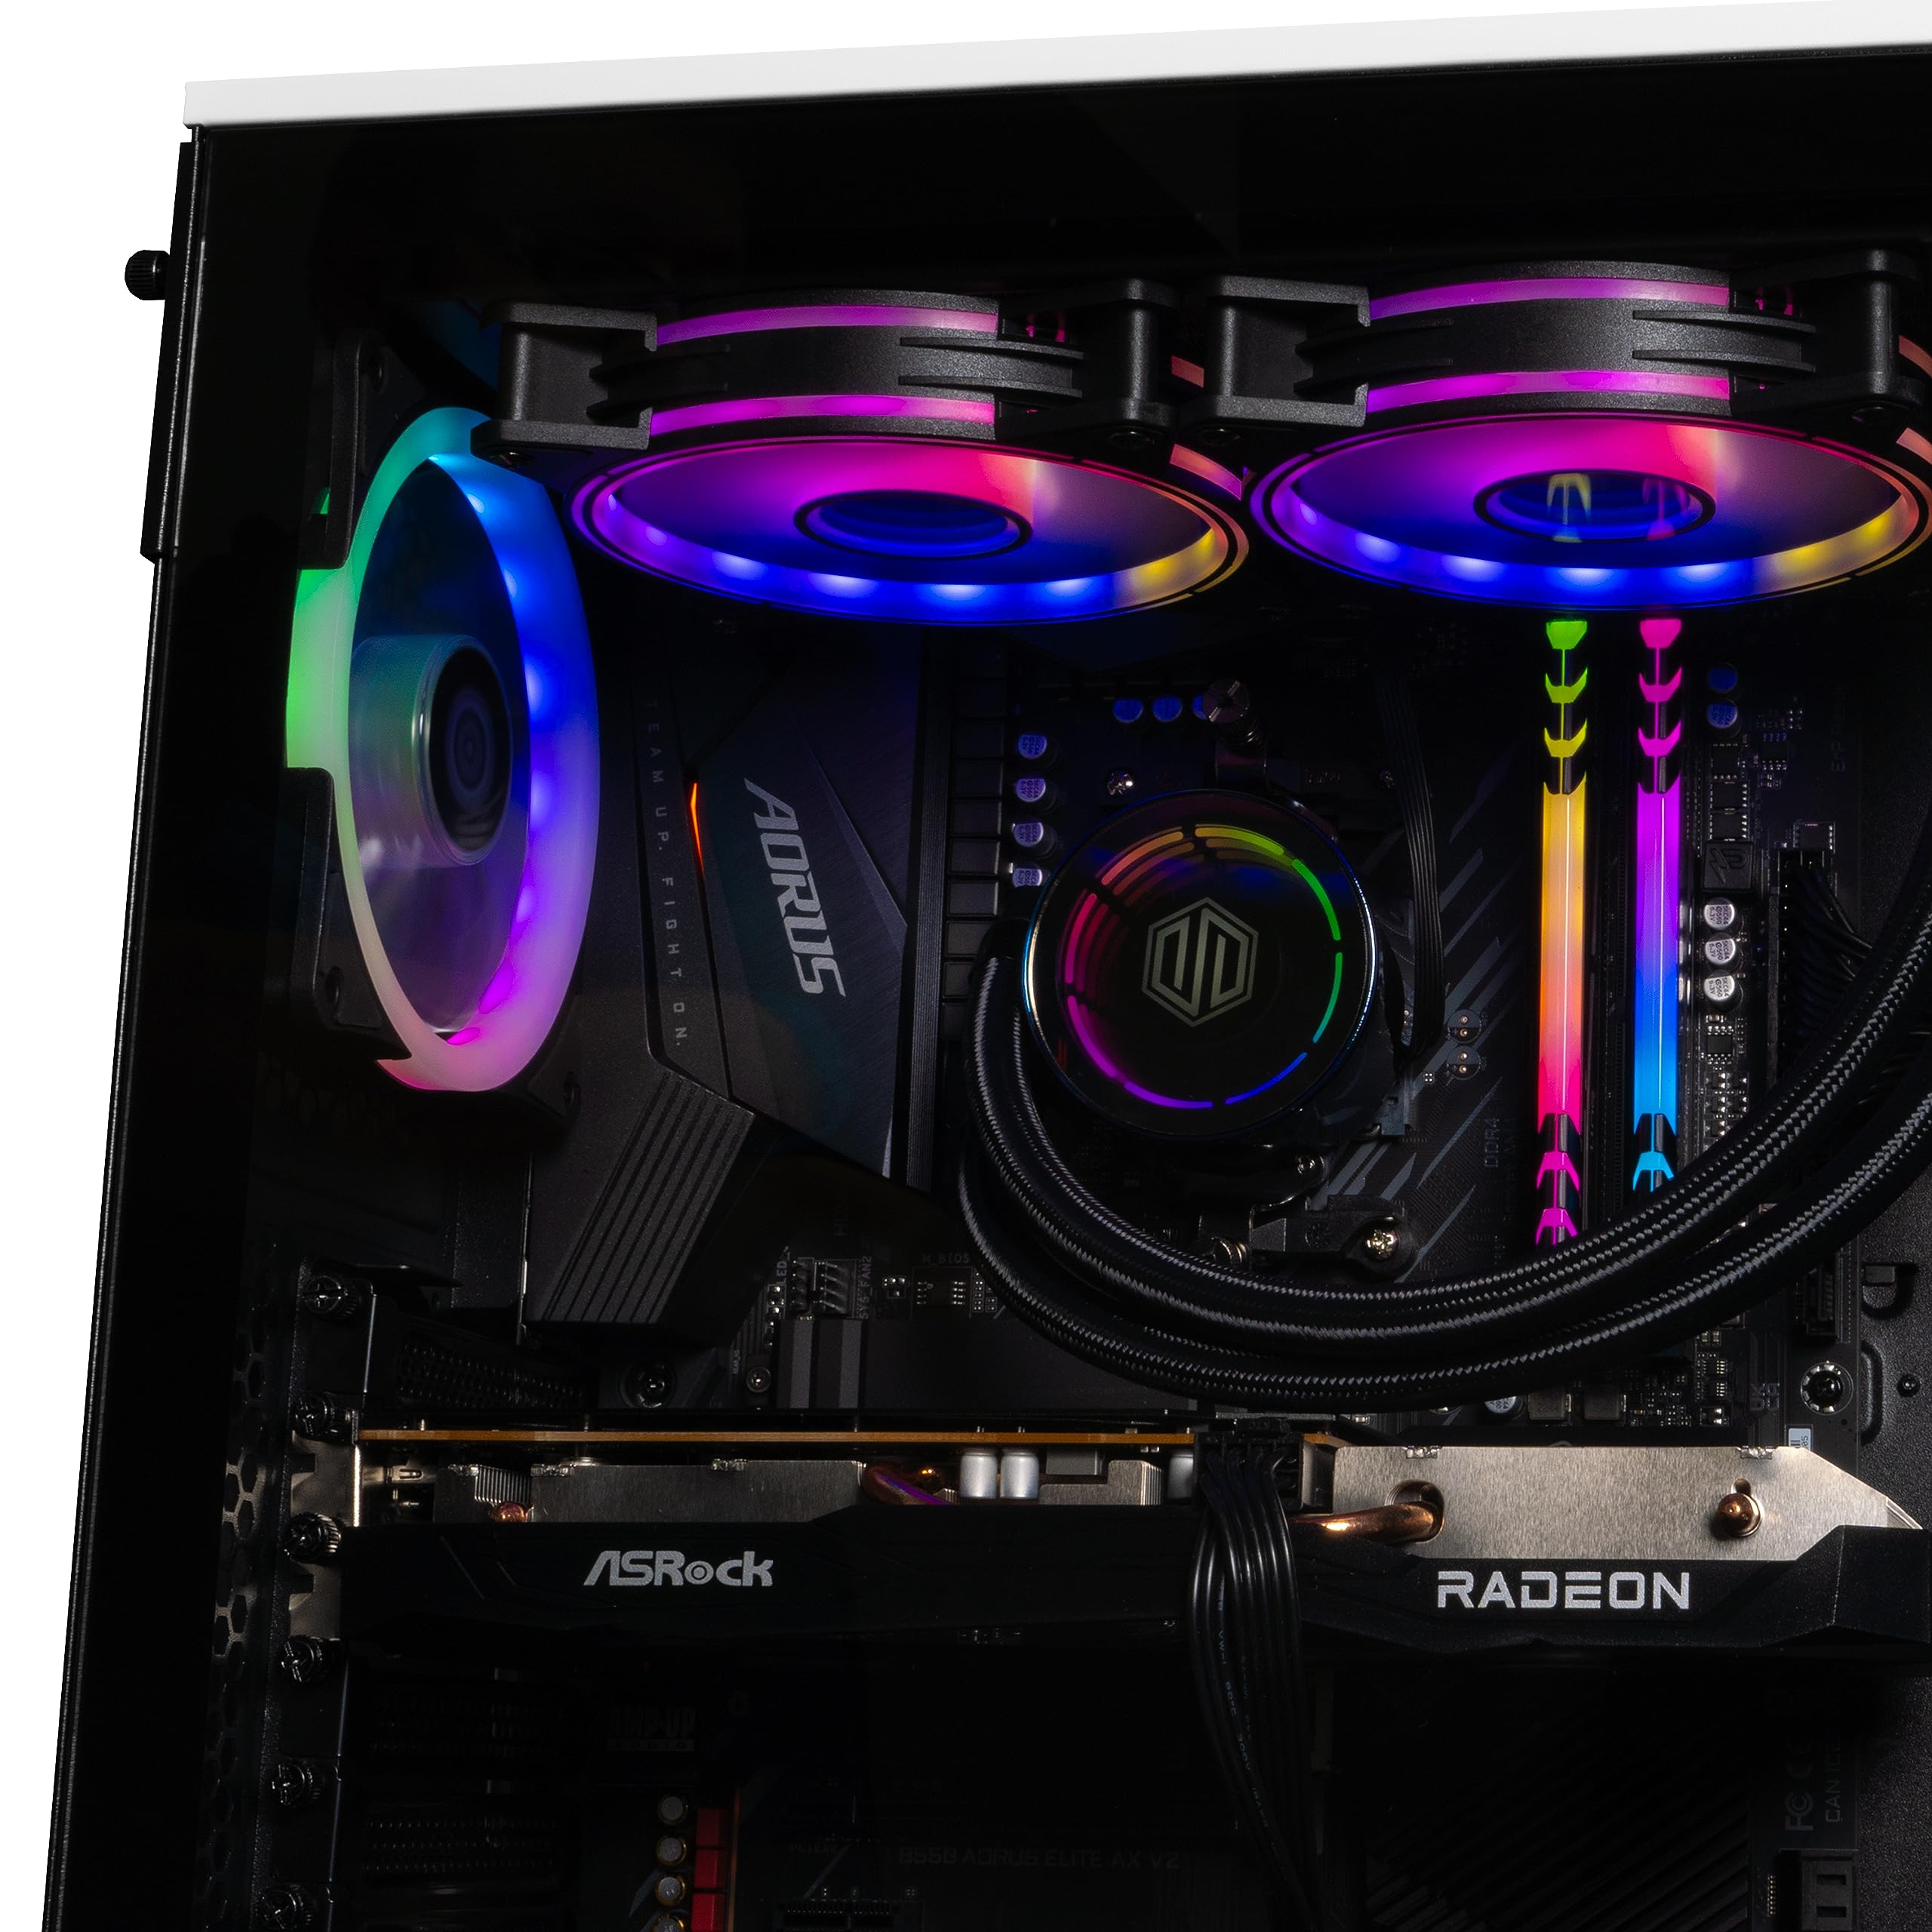 Periphio Nova Prebuilt Gaming PC - Liquid Cooled PC | AMD Ryzen 5 5600X CPU (4.6GHz Turbo) | Radeon RX 6600 GPU (8GB) | 1TB NVMe SSD M.2 | 16GB DDR4 RAM | Gaming Desktop Computer | WiFi + BT